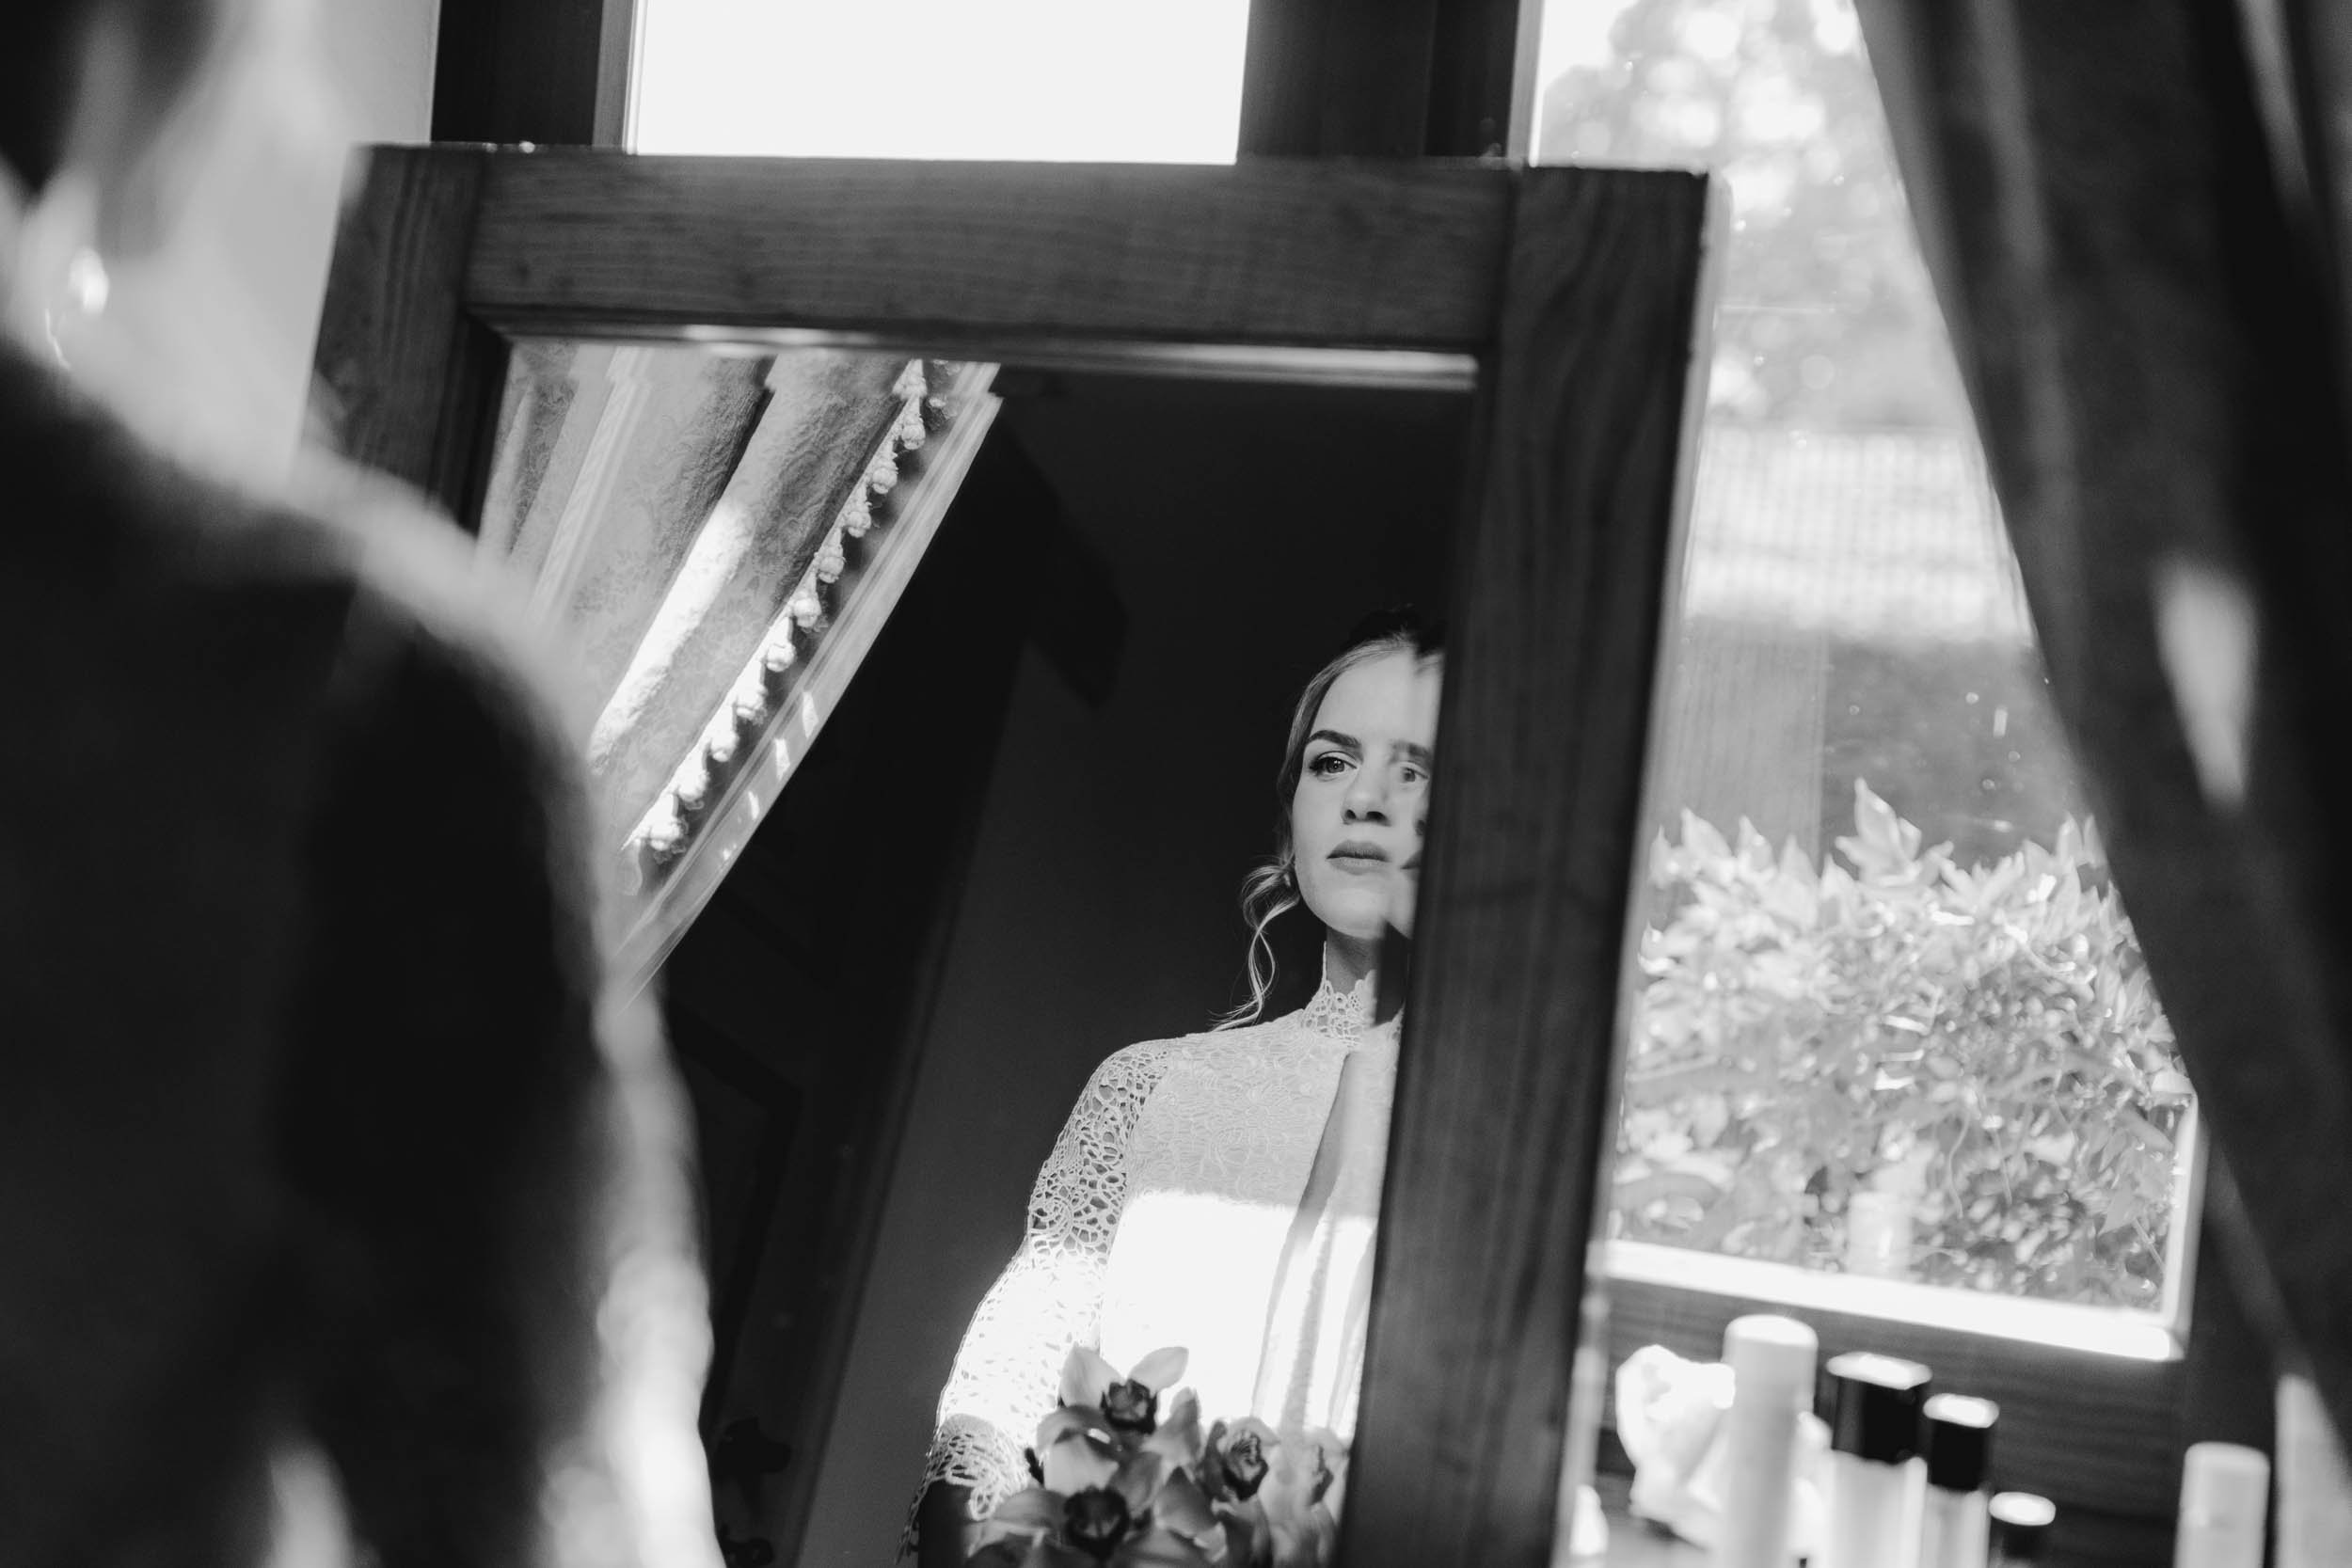 025 - Preparazione sposa - Miriam Callegari Fotografa.JPG